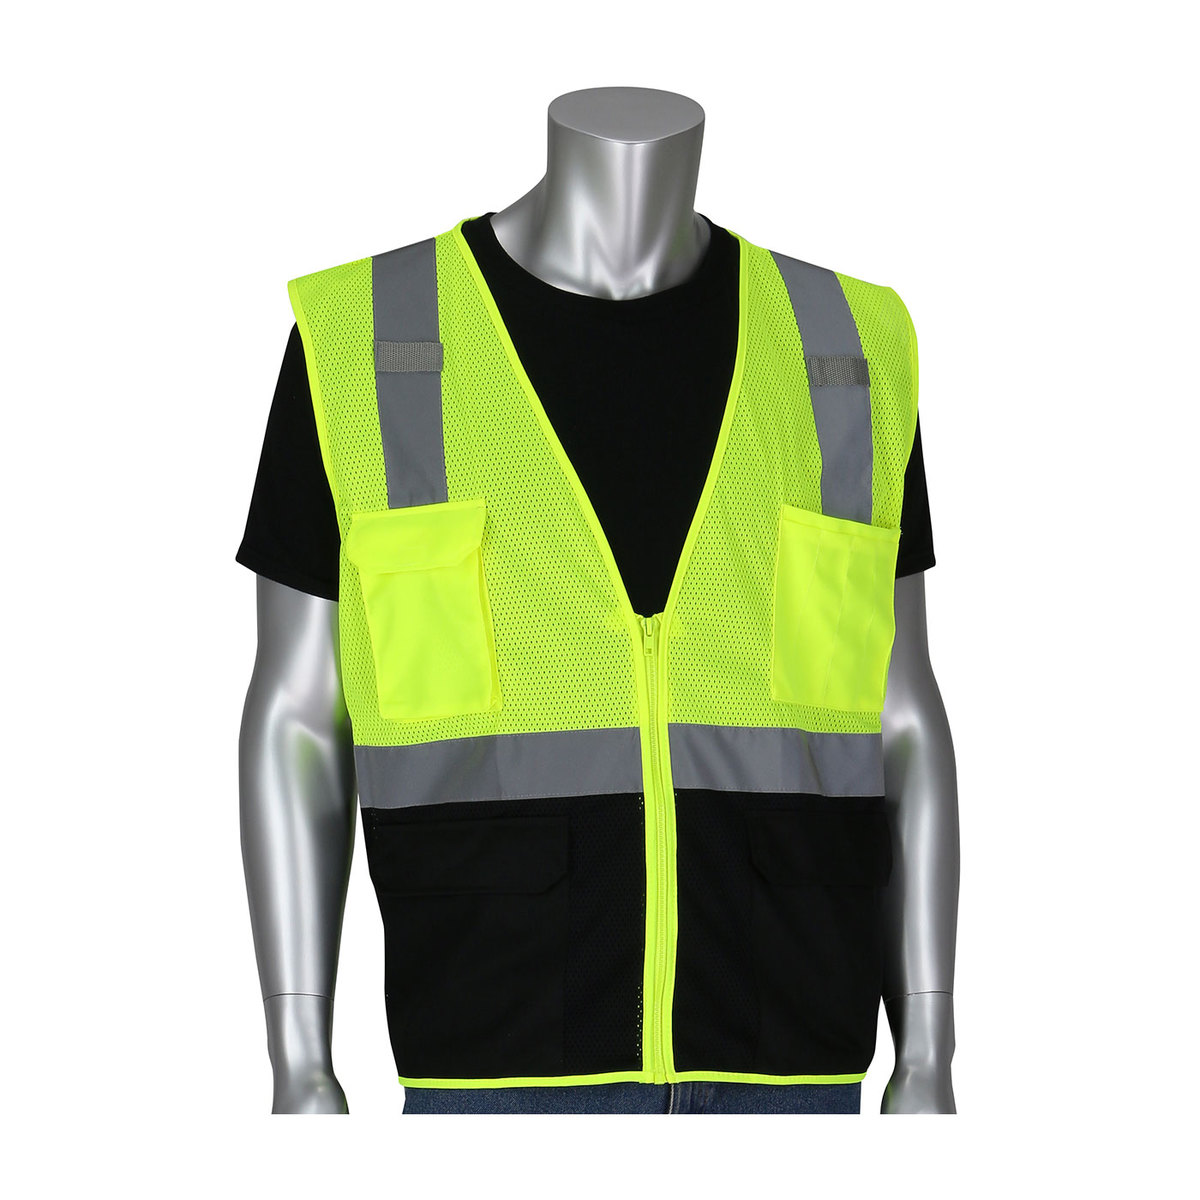 PIP® Large Hi-Viz Yellow/Hi-Viz Orange Breathable Polyester/Mesh Two-Tone Value Vest